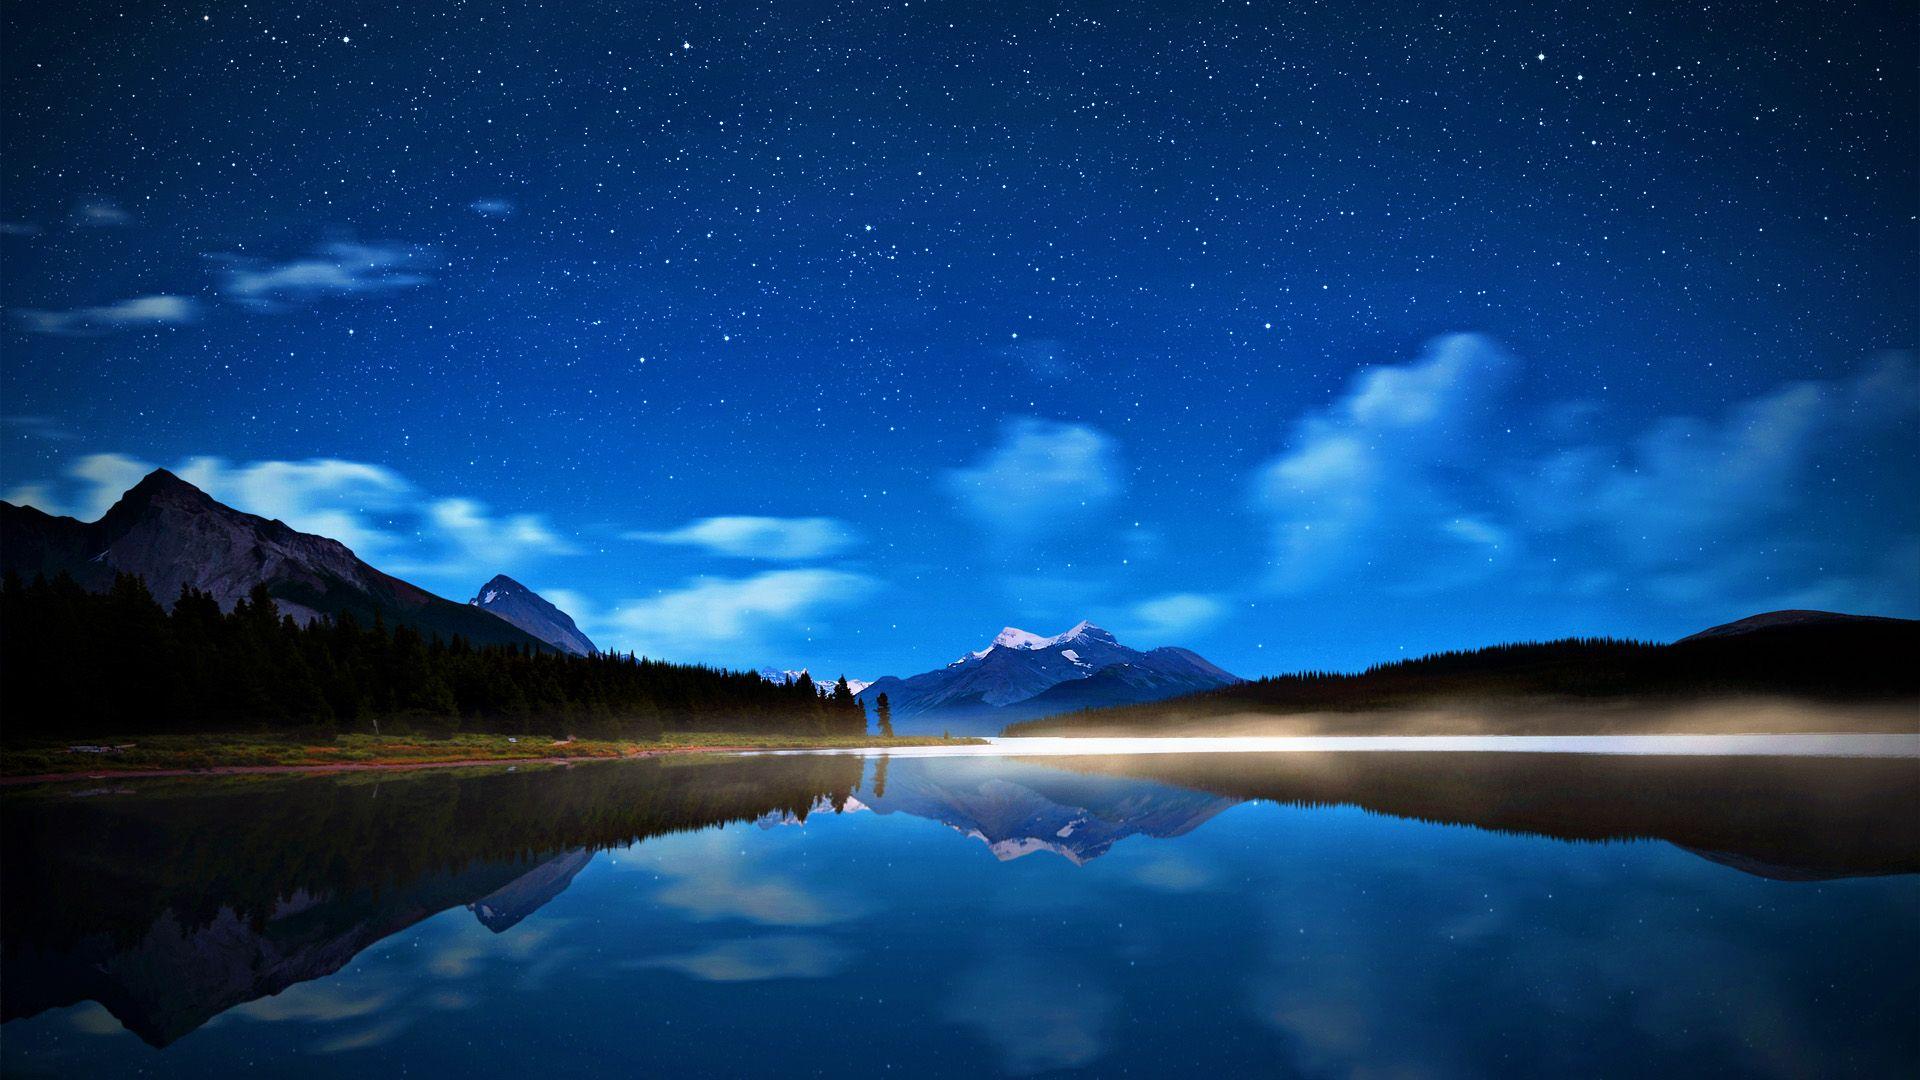 Beautiful Night Sky Wallpaper 46263 1920x1080 px